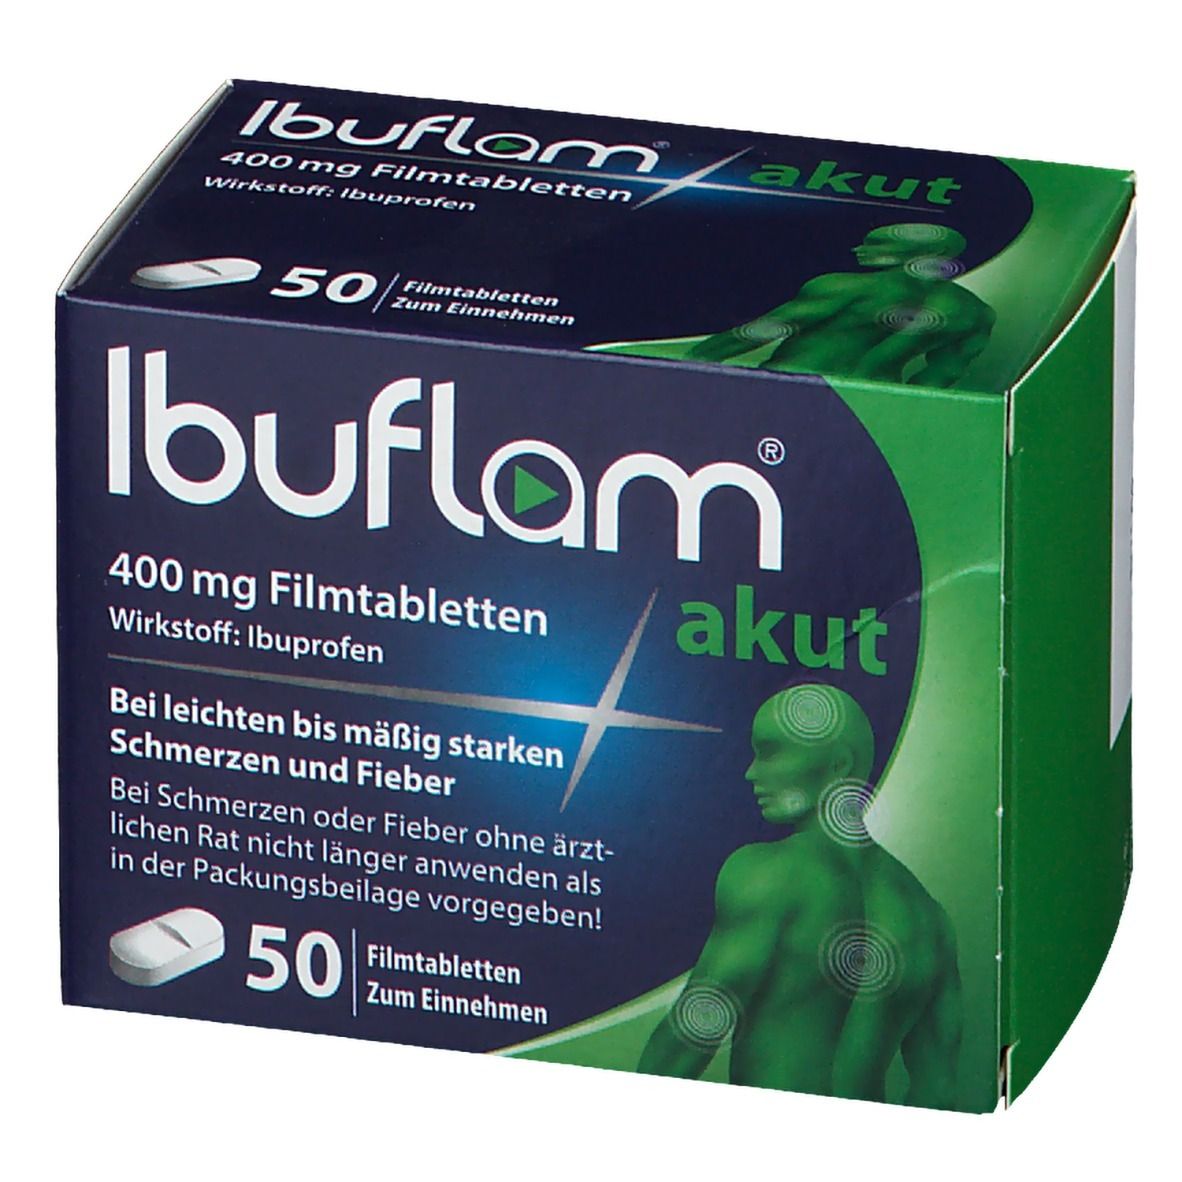 Ibuflam® akut: 400 mg Ibuprofen Schmerztabletten